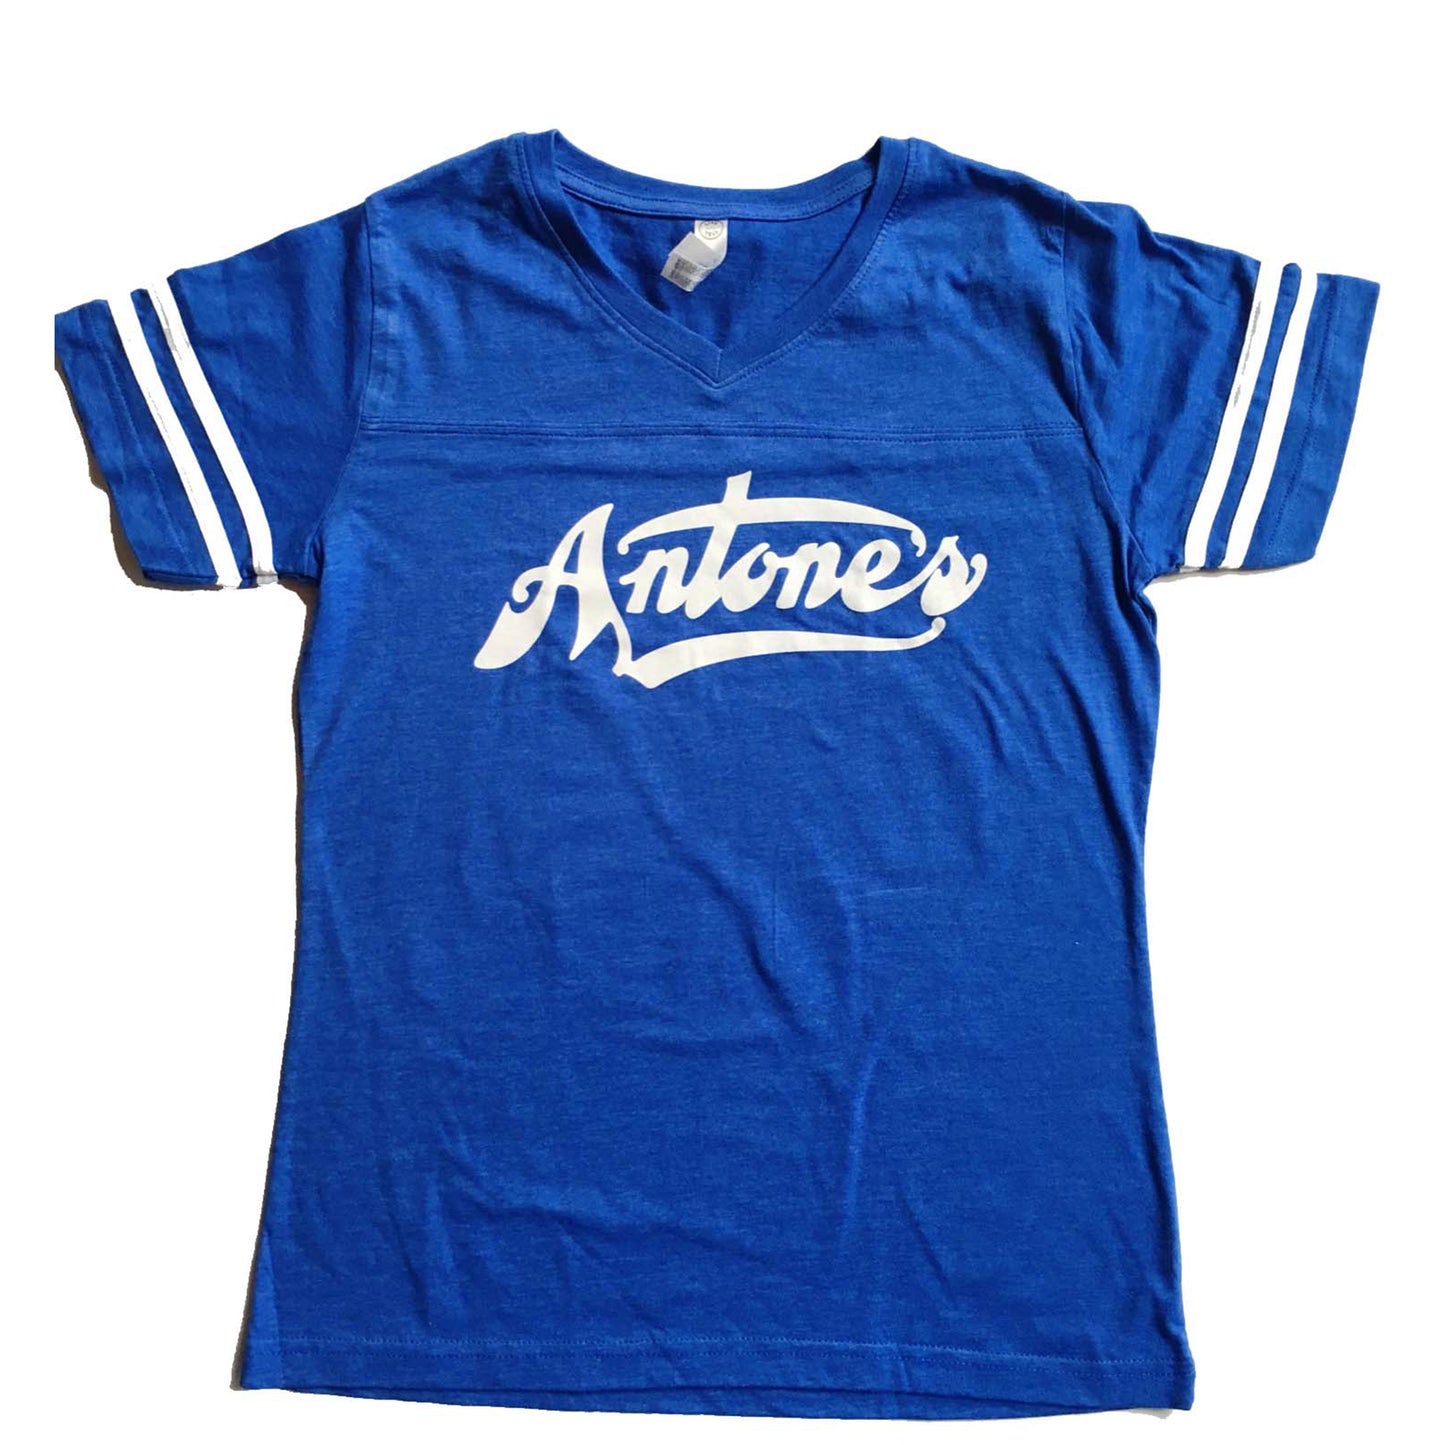 Women's Blue Antone's '75 Jersey Shirt